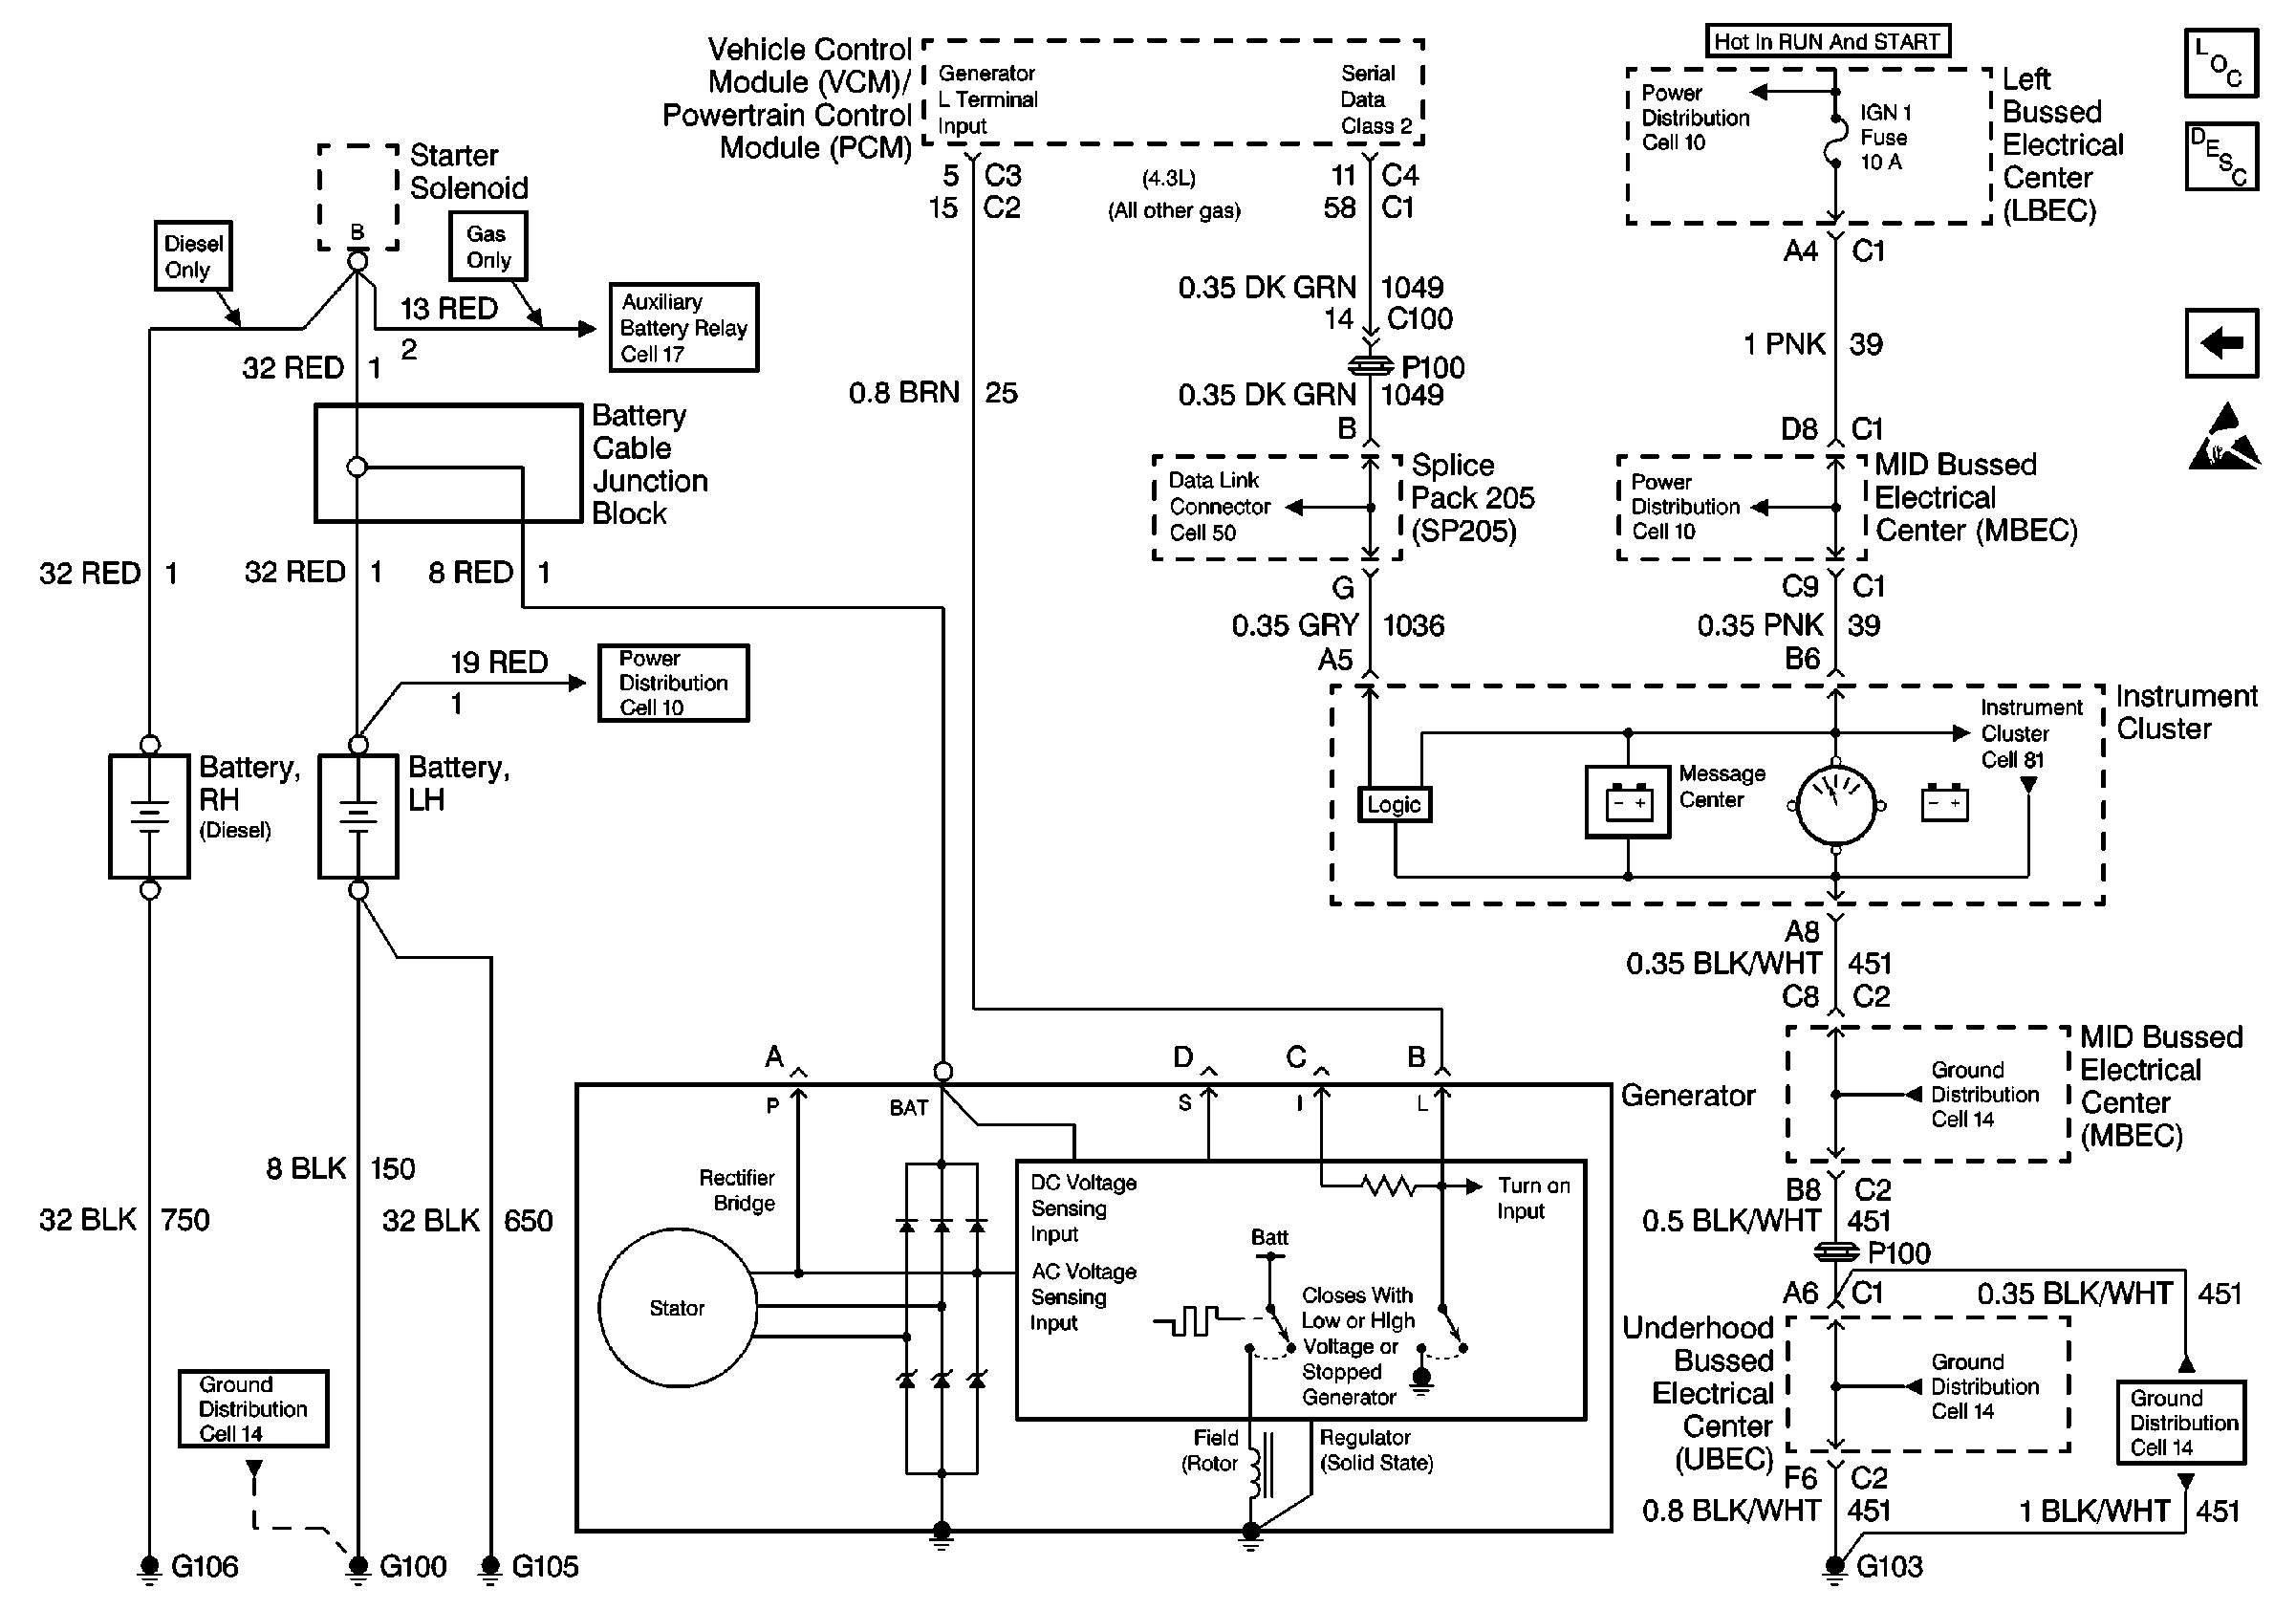 Alternator Wiring Diagram 4 Wire from ls1tech.com